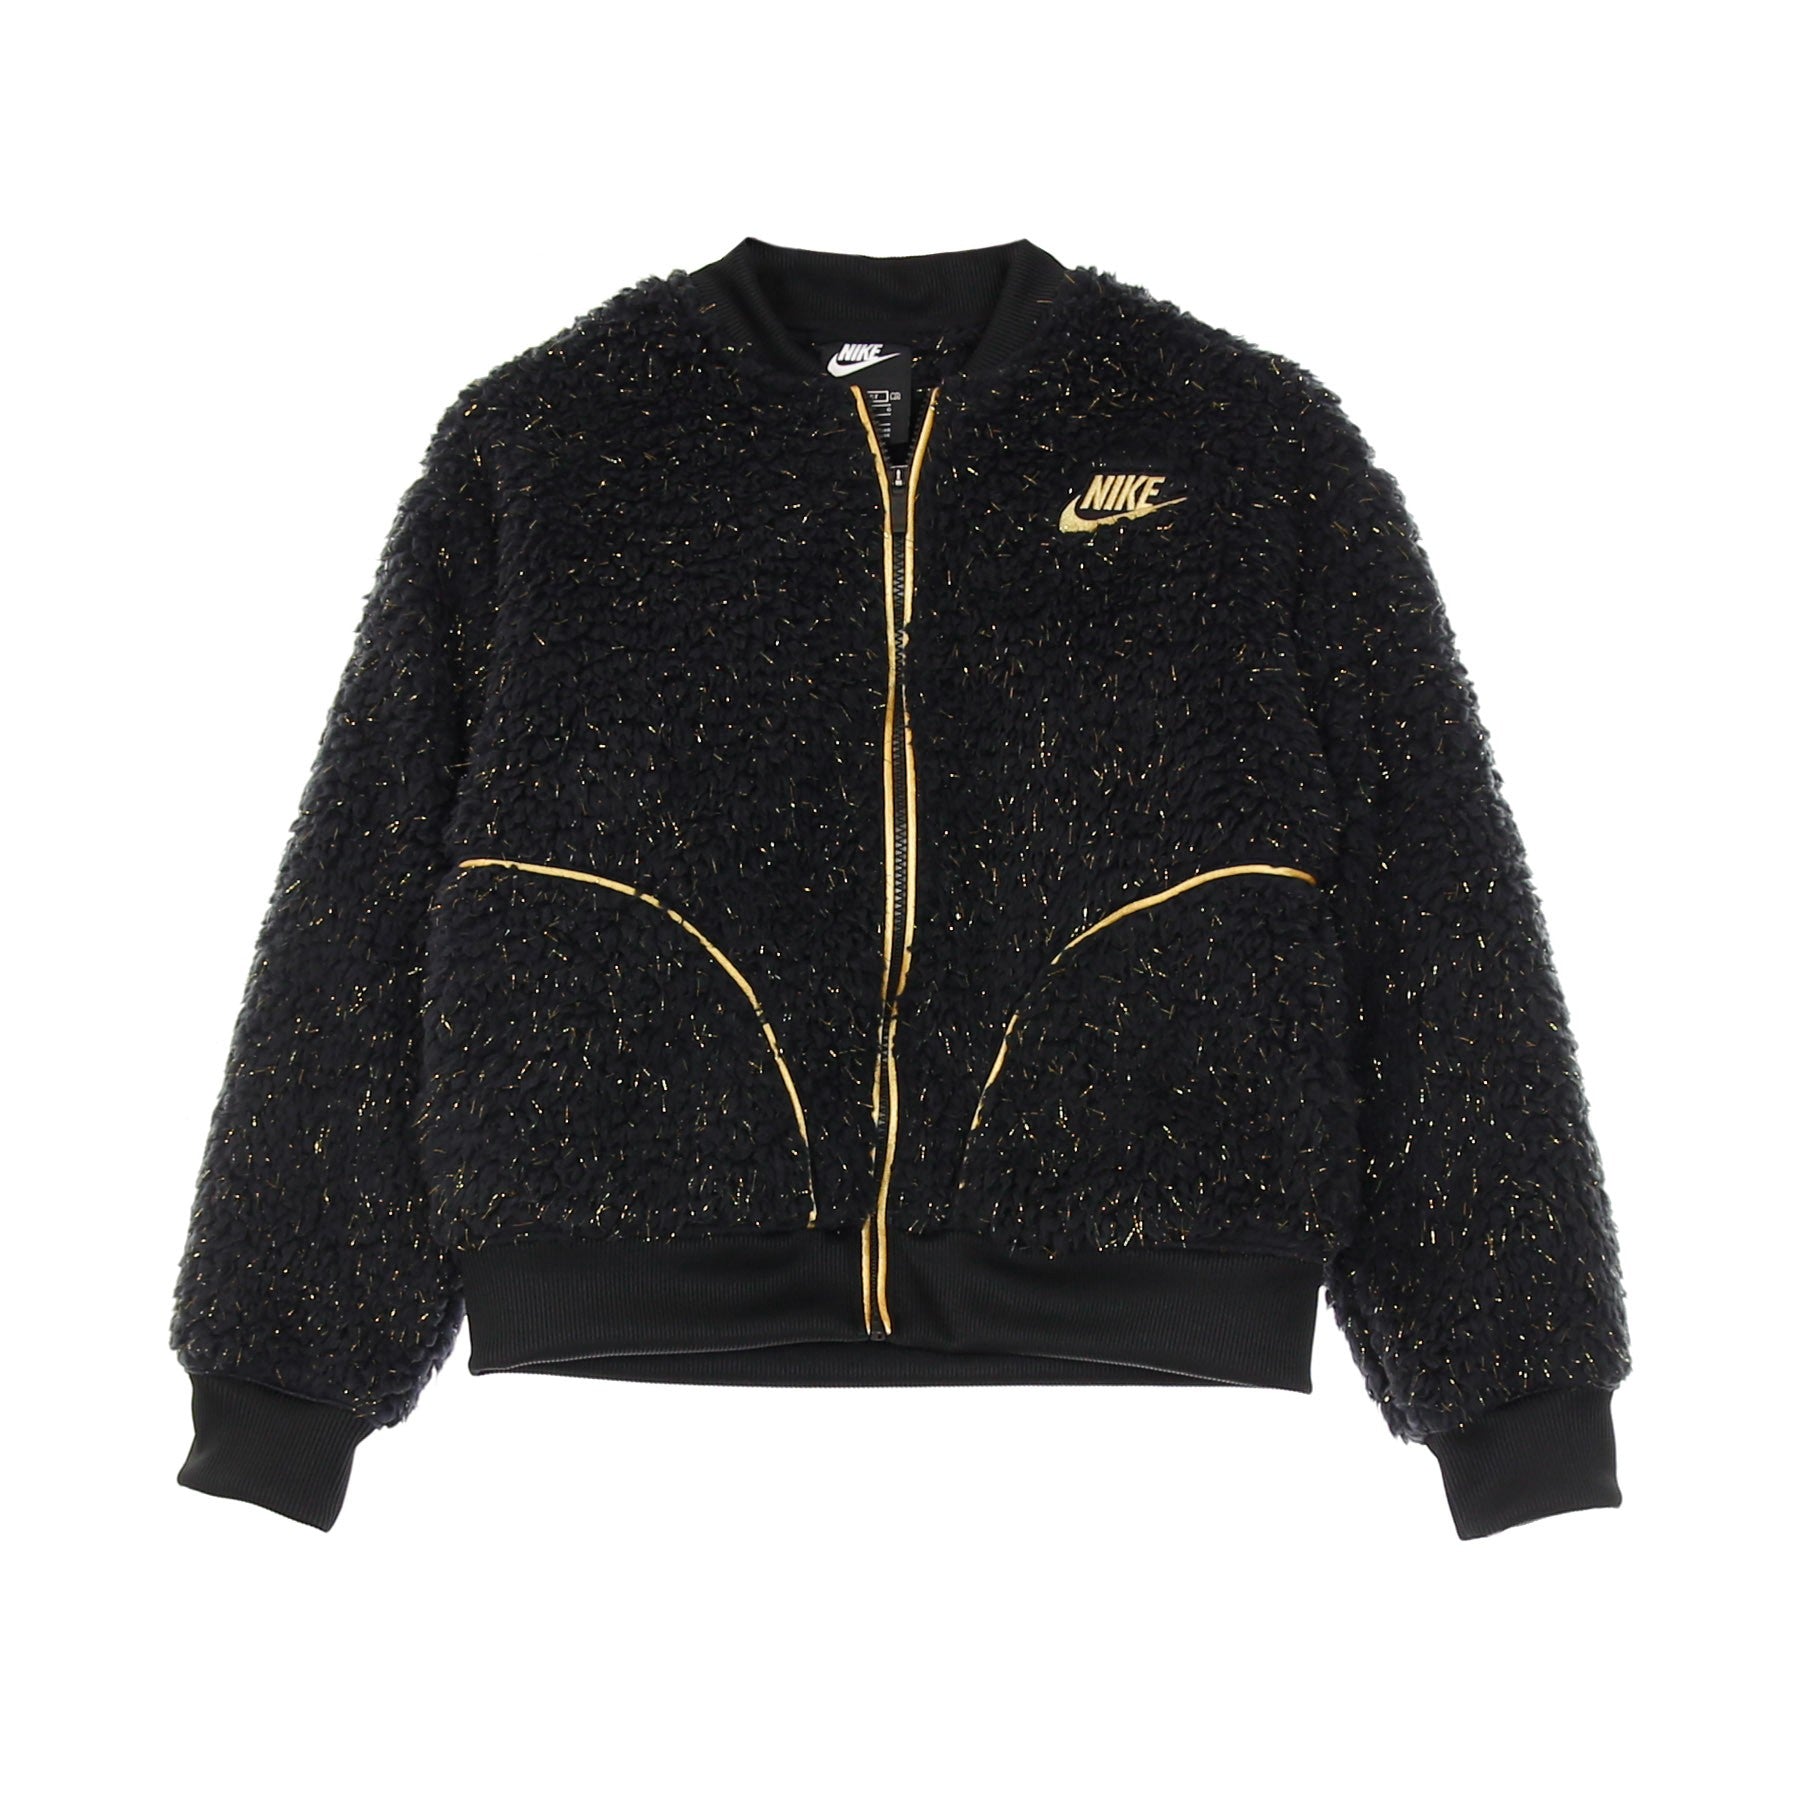 Nike, Orsetto Bambina Sportswear Sherpa Shine, Black/club Gold/rose Gold